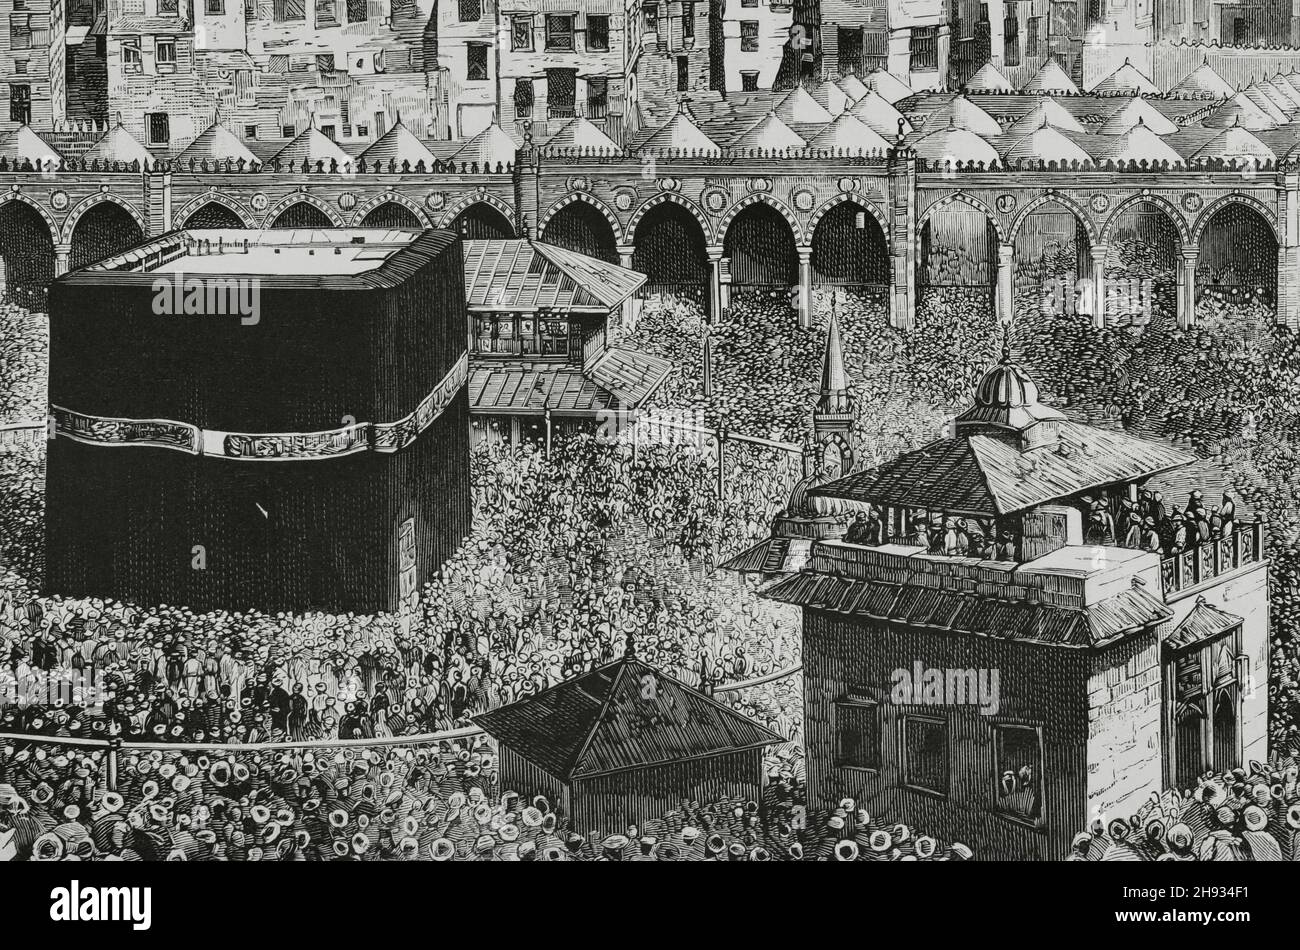 Saudi Arabia, Mecca. In the centre of al-Masjid al-Haram Mosque, the Kaaba, which houses the 'Black Stone. Engraving. Detail. La Ilustración Española y Americana, 1882. Stock Photo